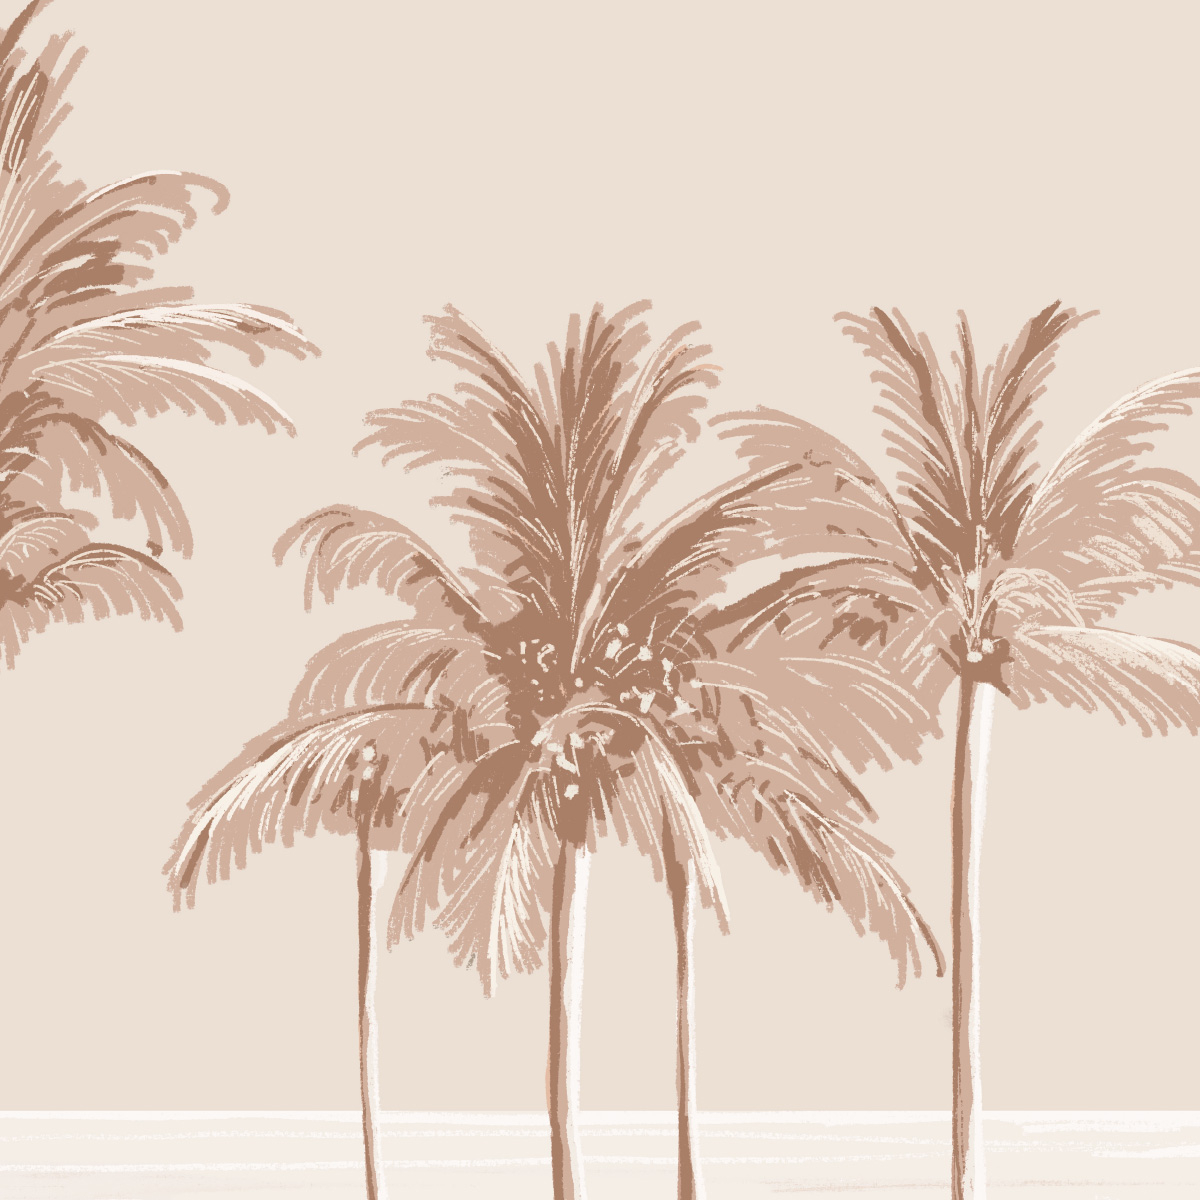 Panoramic wallpaper Palm trees Acte-Deco